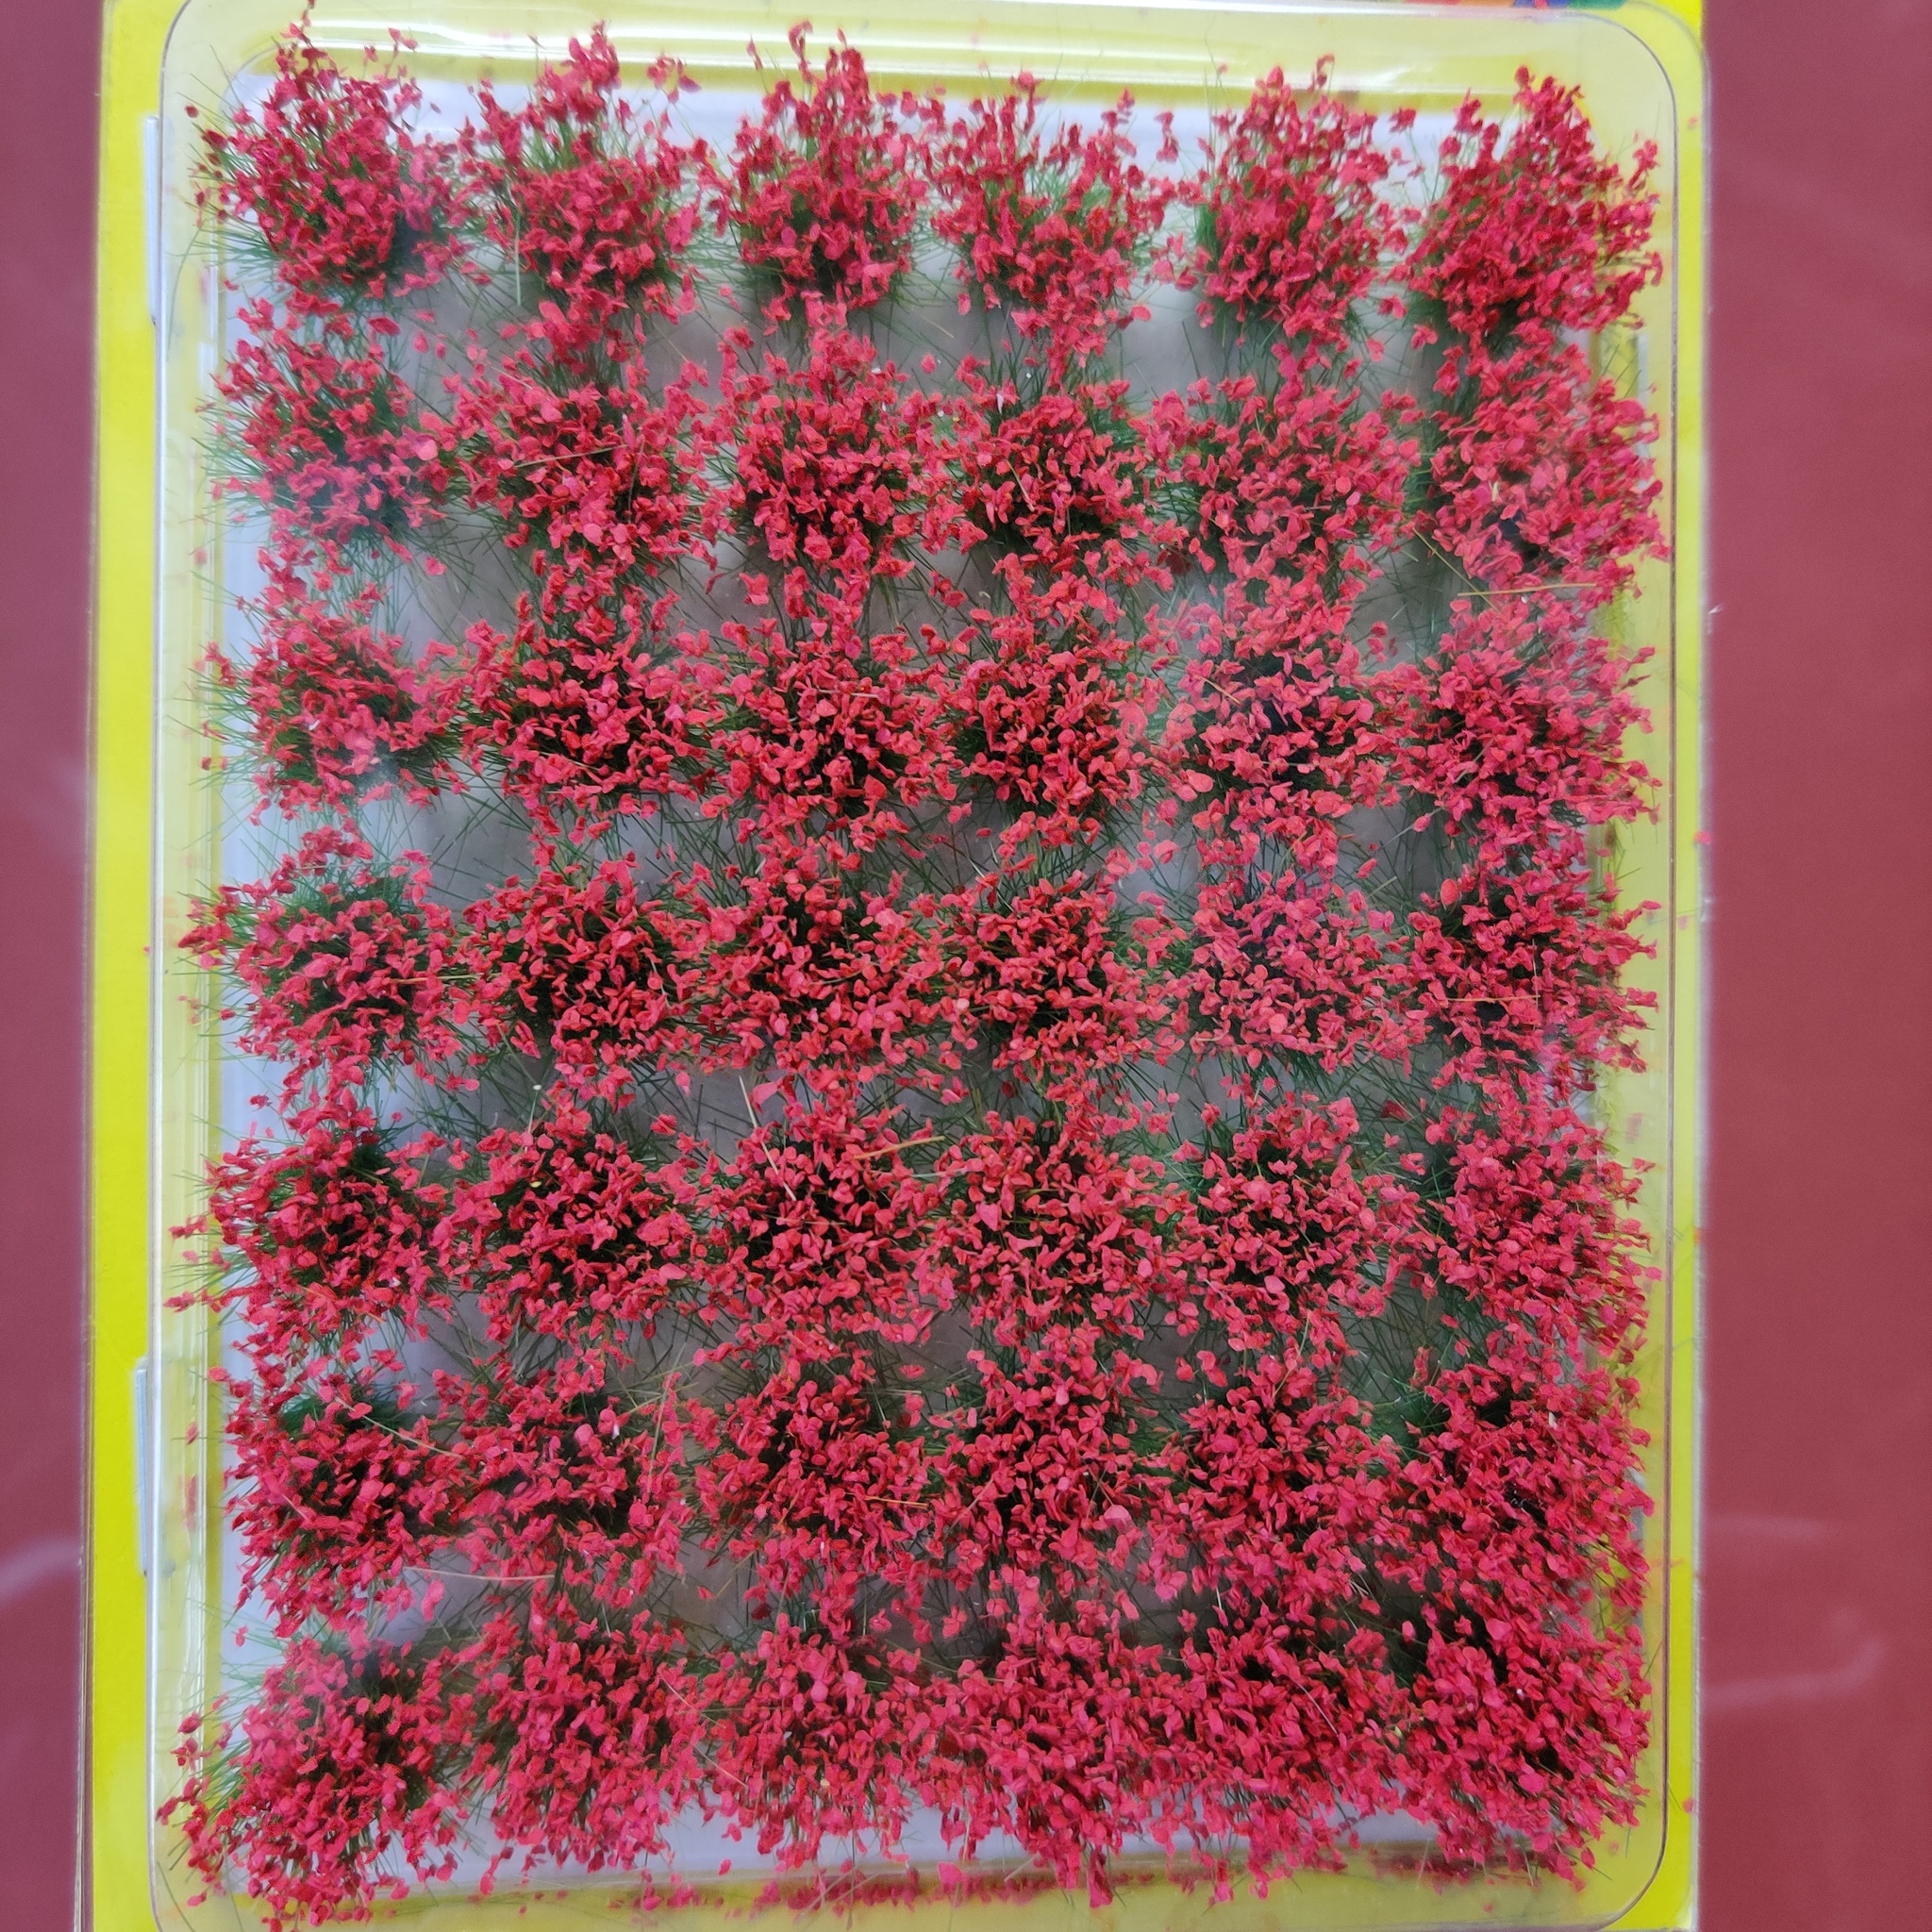 NOCH 07042 Blommande grästuvor XL/Grass Tufts Mini Set XL blooming 42 stycken/pcs